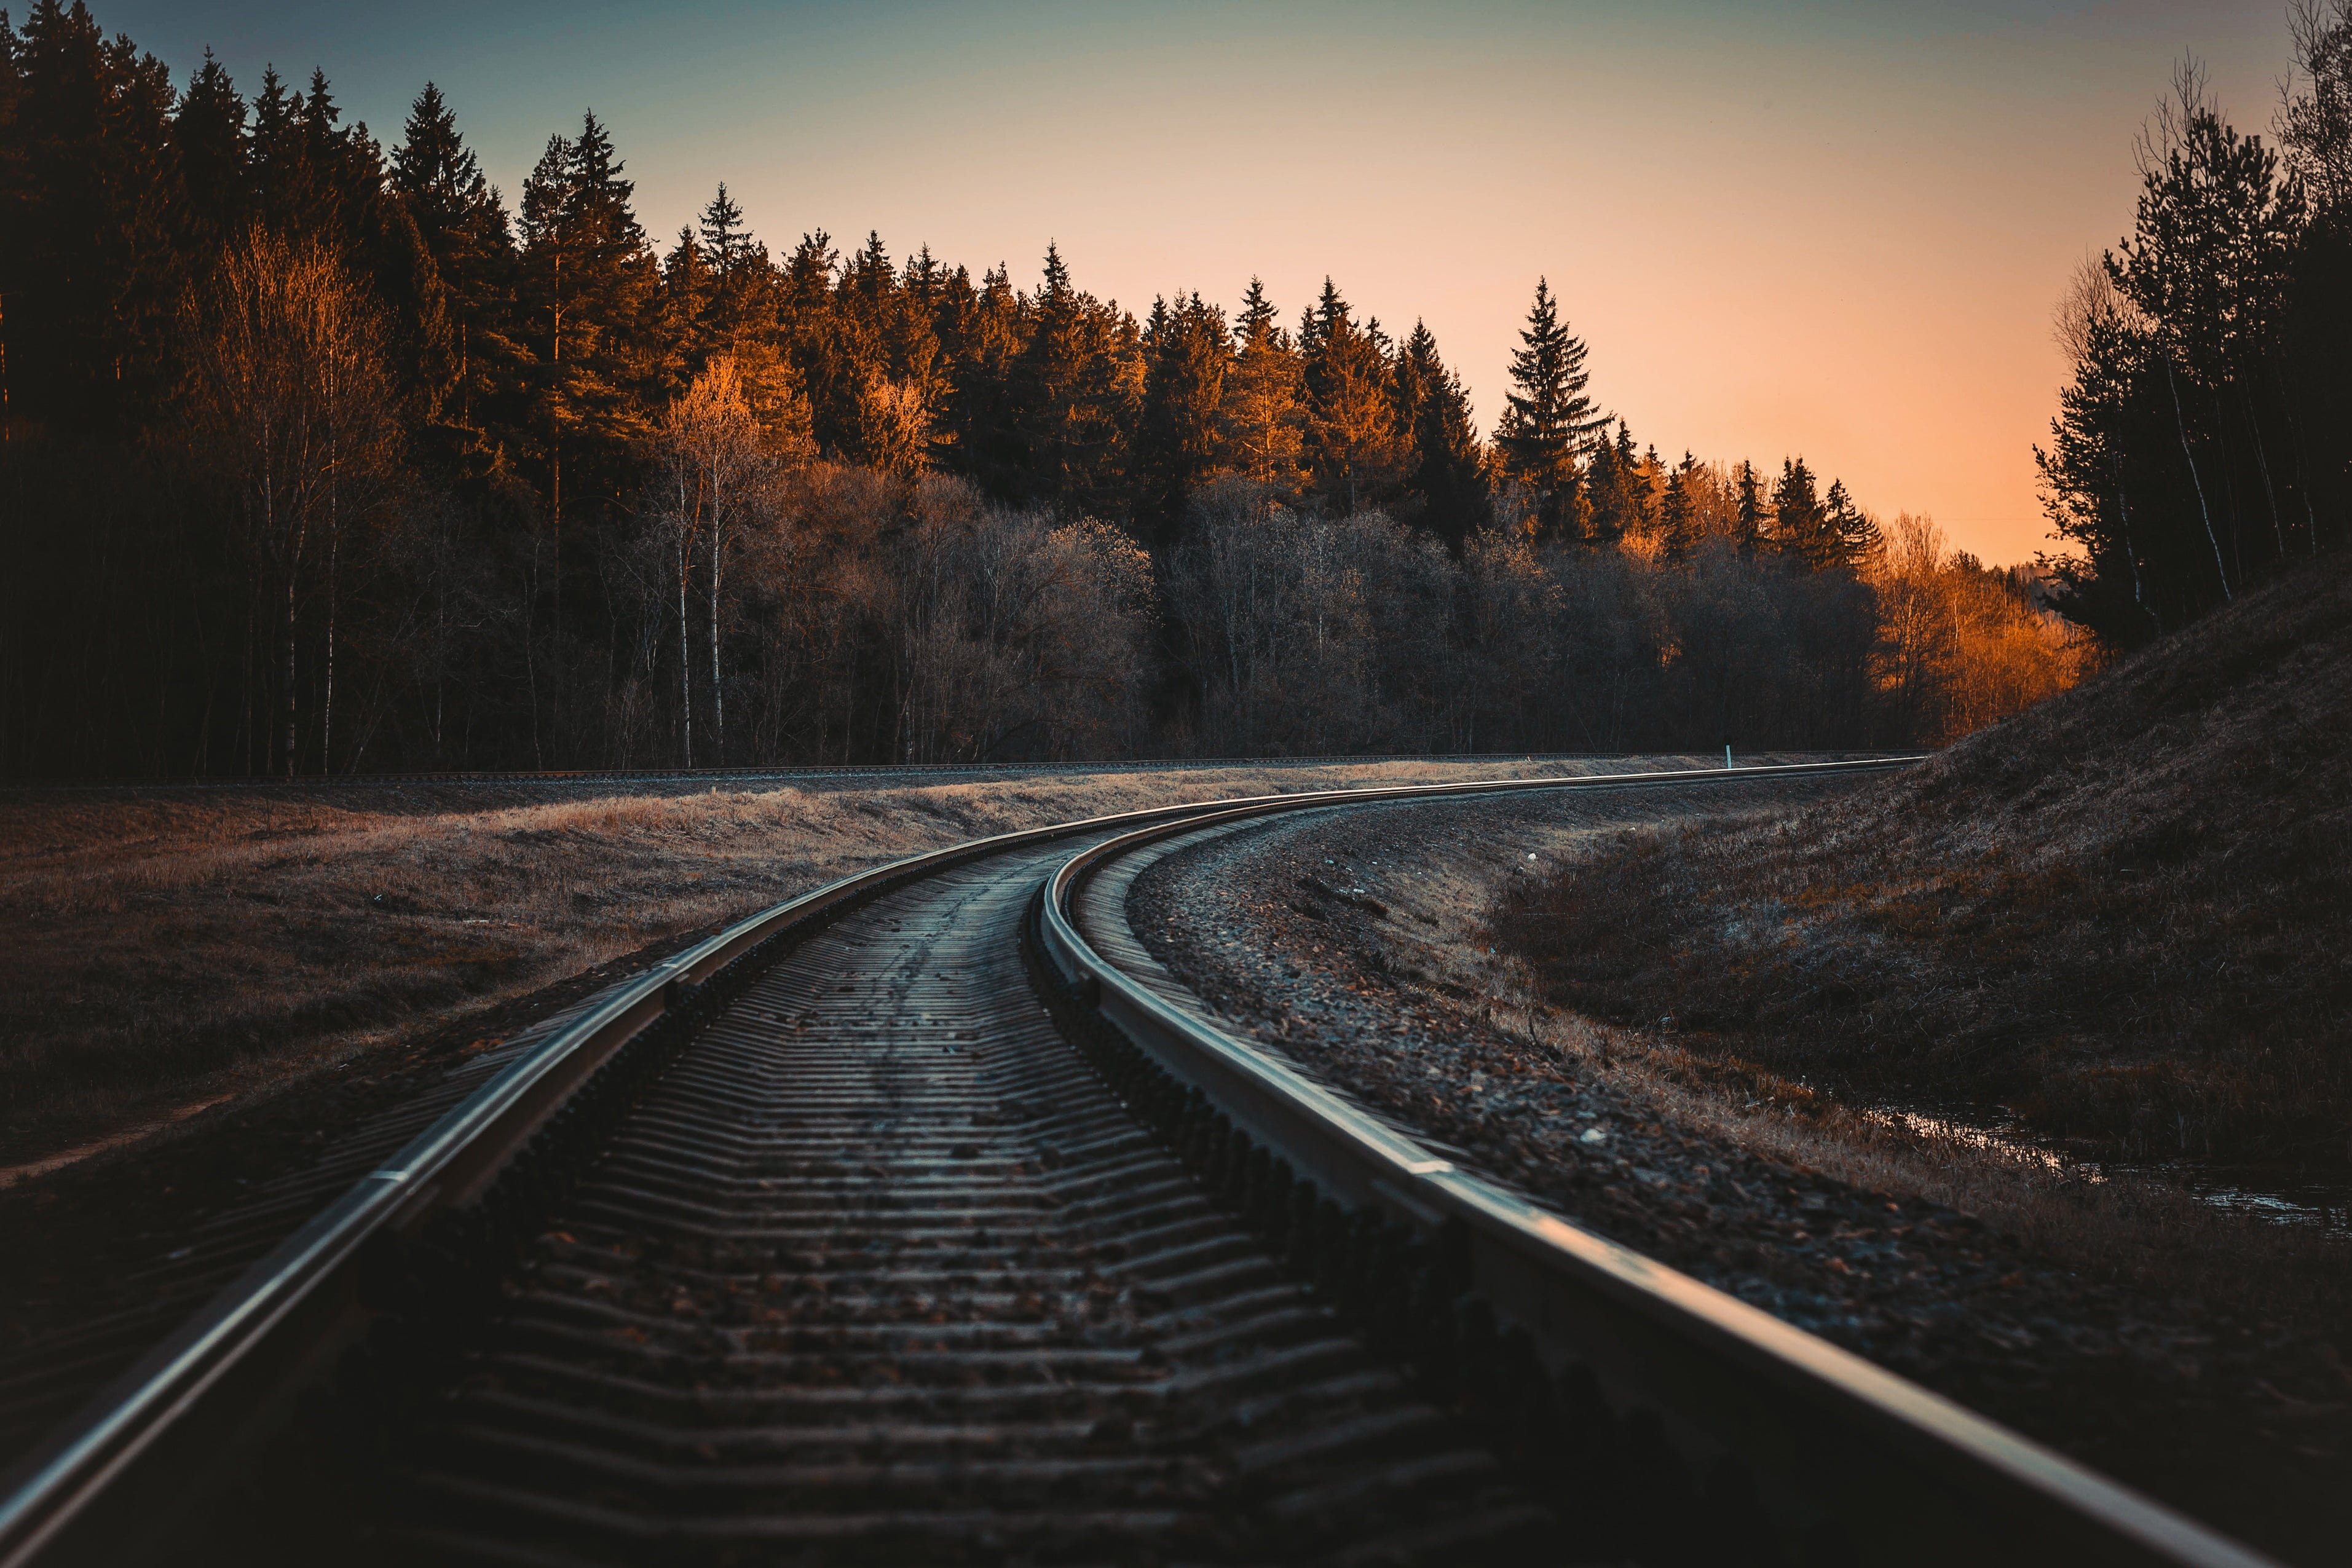 Black train railings, railway, railroad track, forest